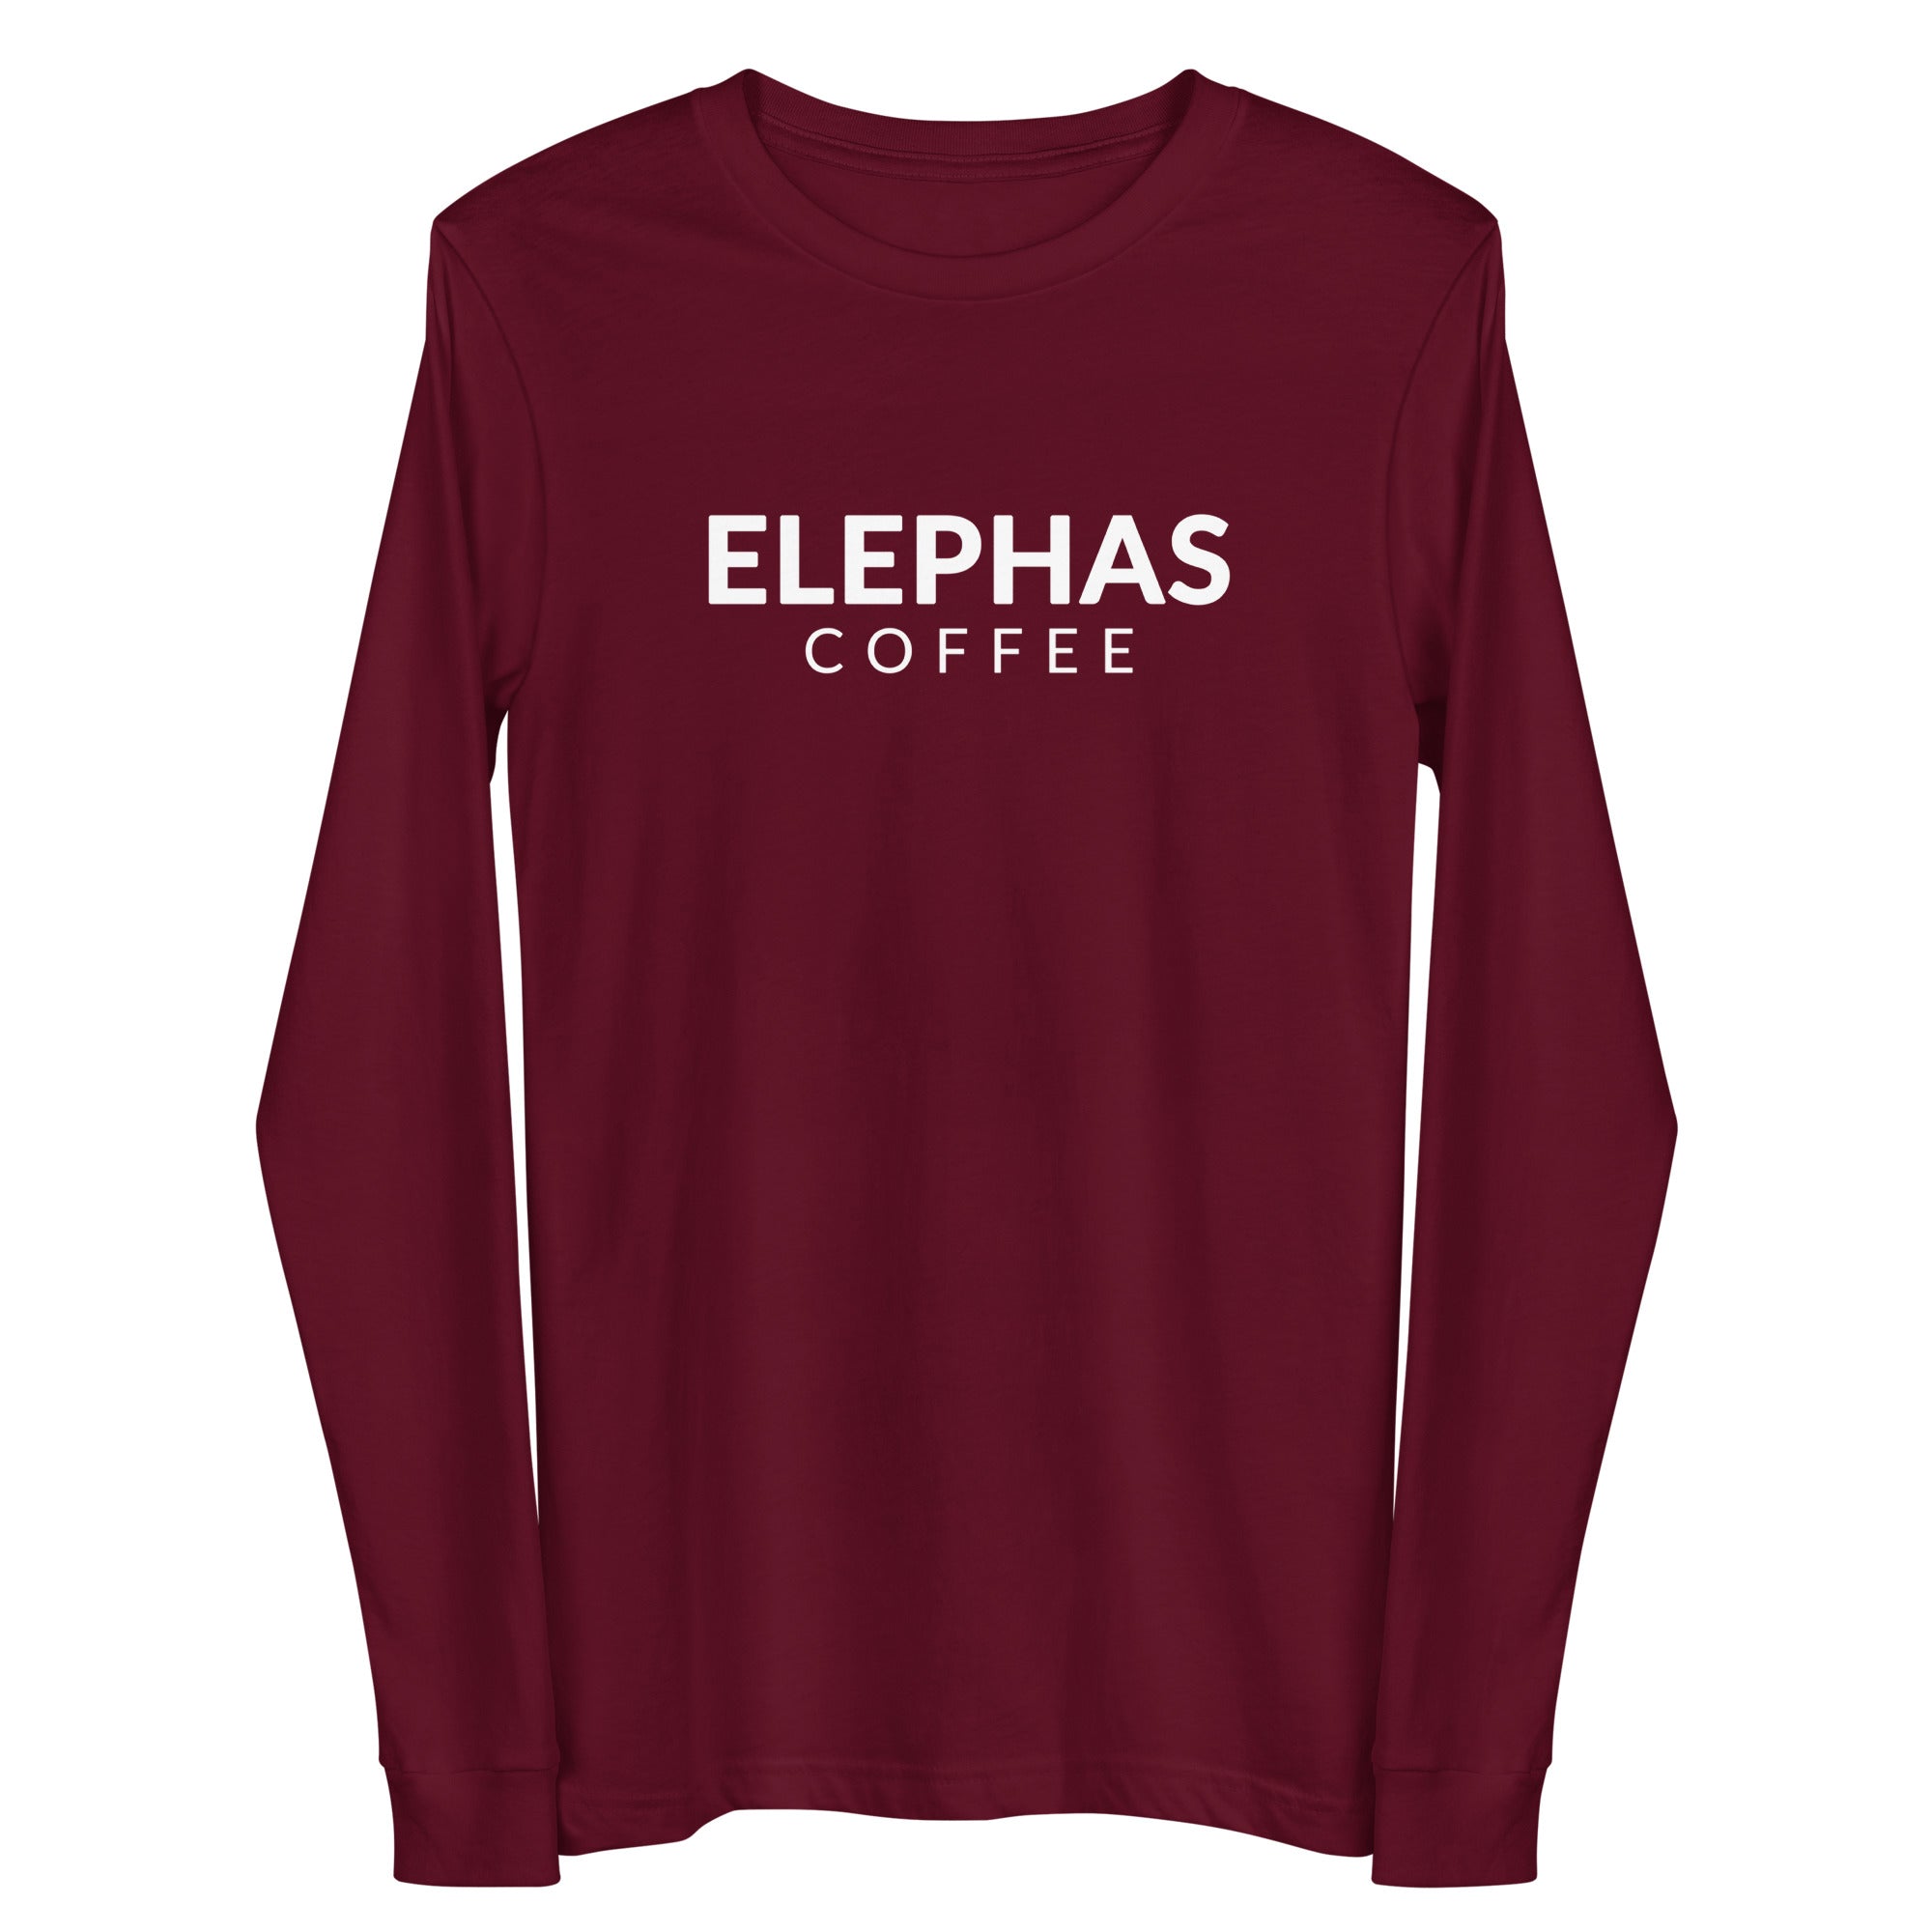 Elephas Coffee - All Caps - Unisex Long Sleeve Tee